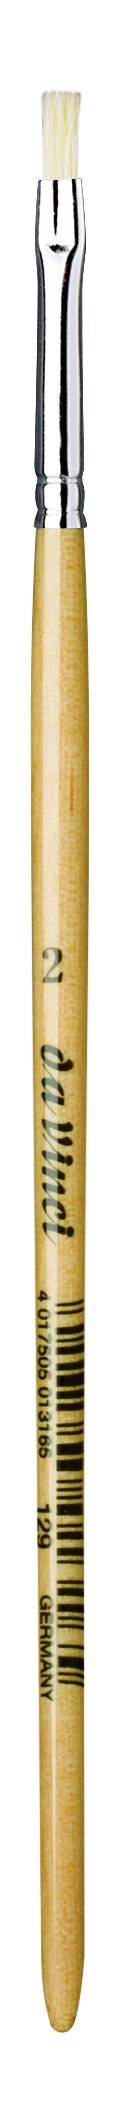 Pennelli Da Vinci Junior borste punta piatta setola sintetica n.2